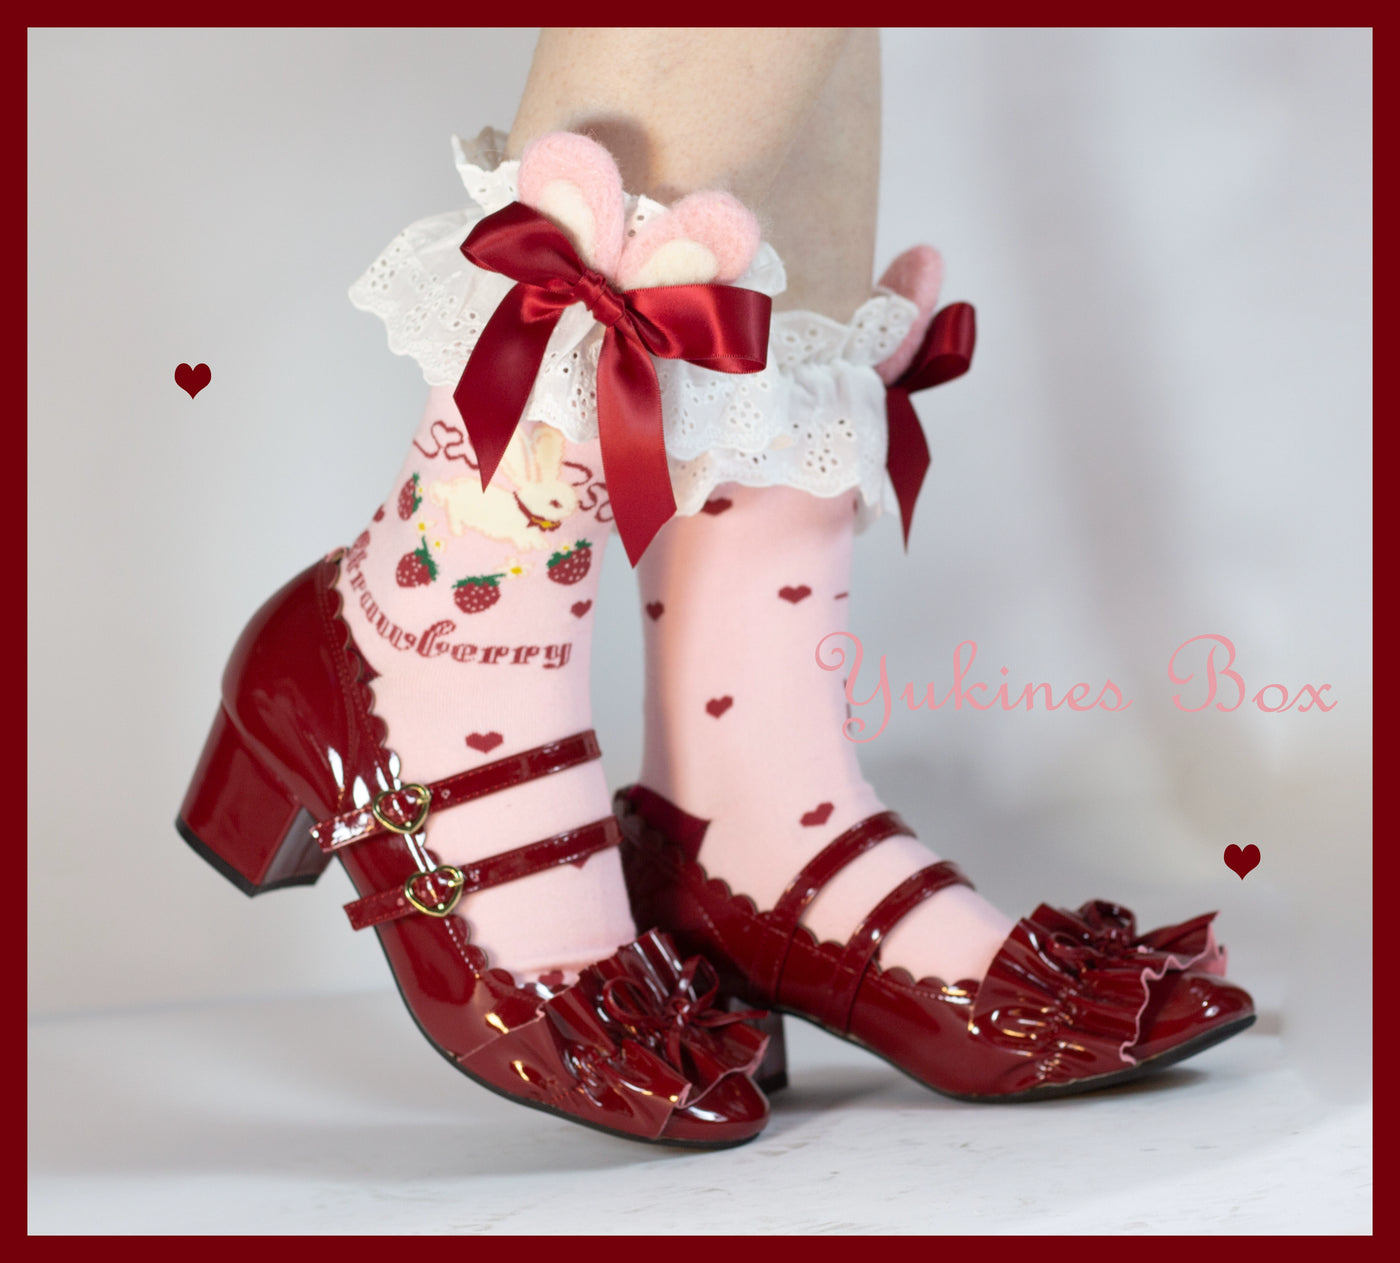 Yukines Box~Kawaii Lolita Rabbit Ear Cuffs and Ankle Lace   